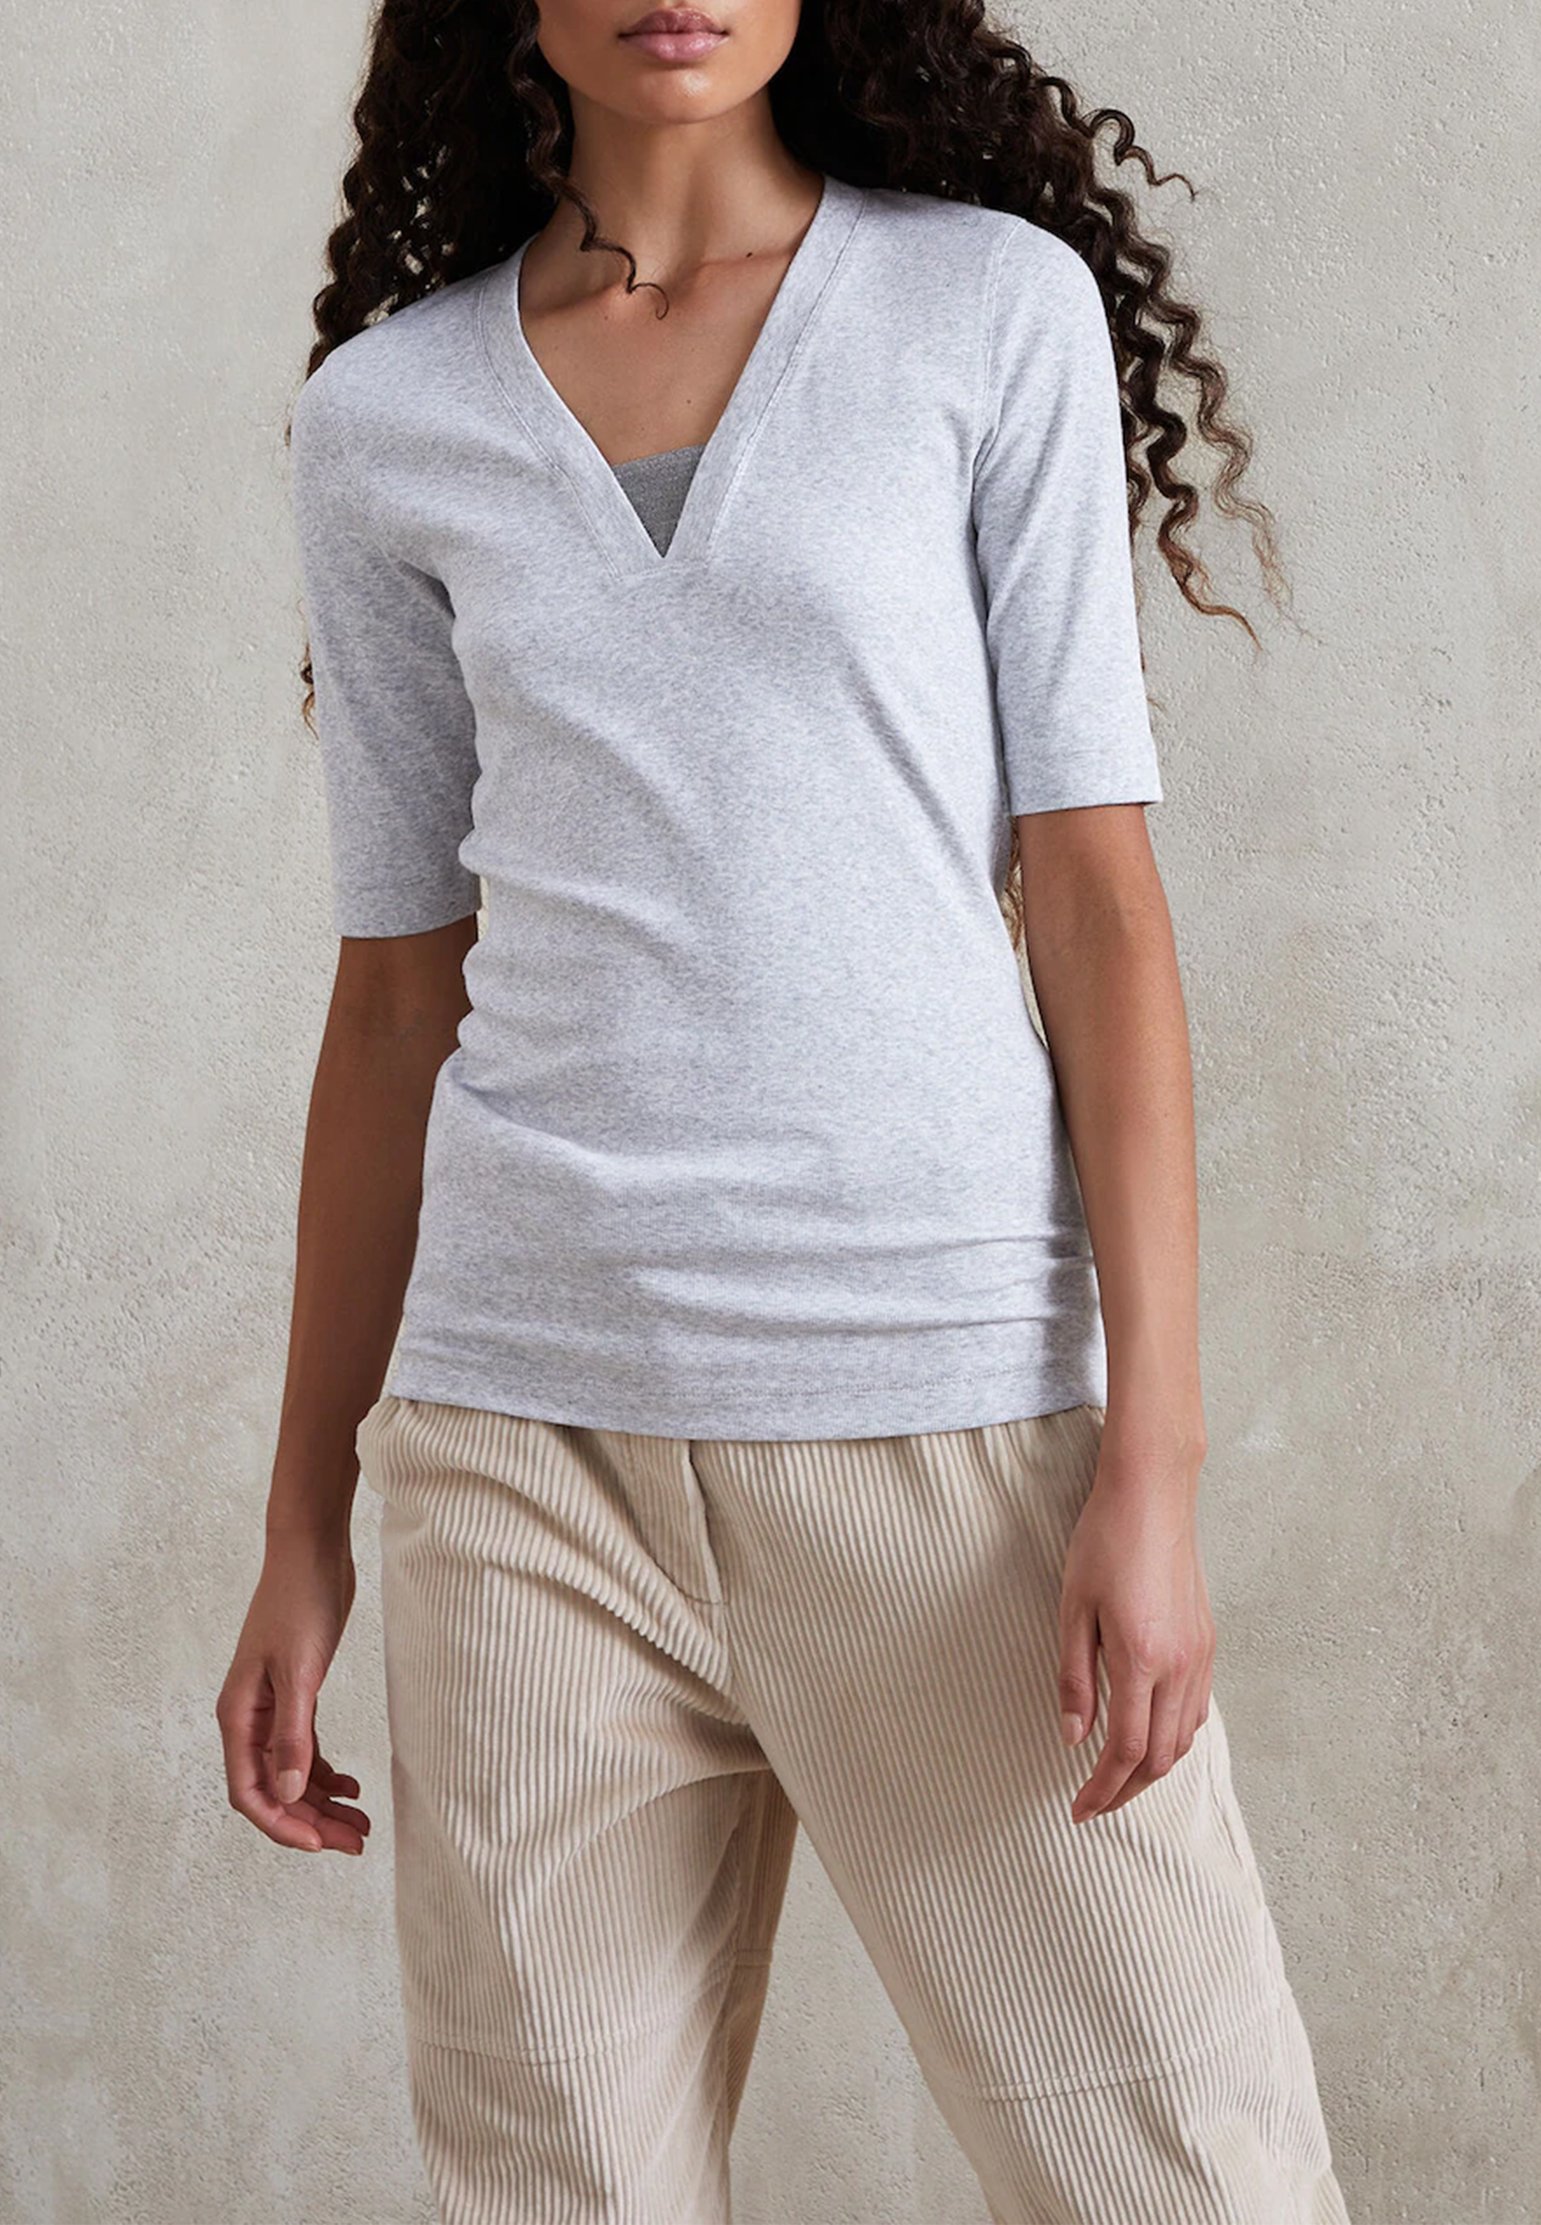 T-Shirt BRUNELLO CUCINELLI Color: grey (Code: 638) in online store Allure